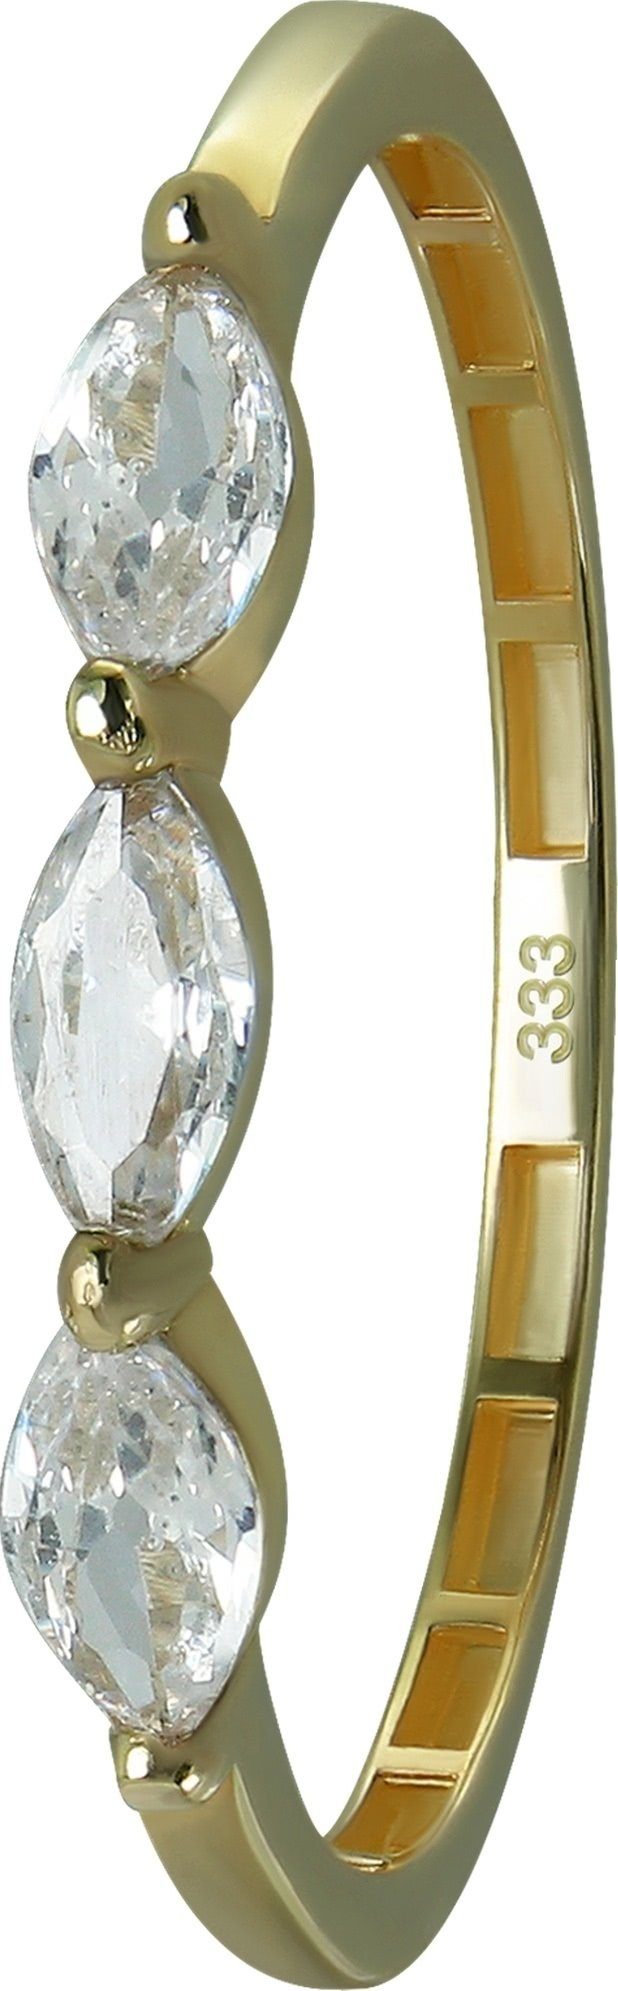 GoldDream Goldring GoldDream Gold Ring Shine Gr.54 Zirkonia (Fingerring), Damen Ring Shine 333 Gelbgold - 8 Karat, Farbe: gold, weiß | Goldringe